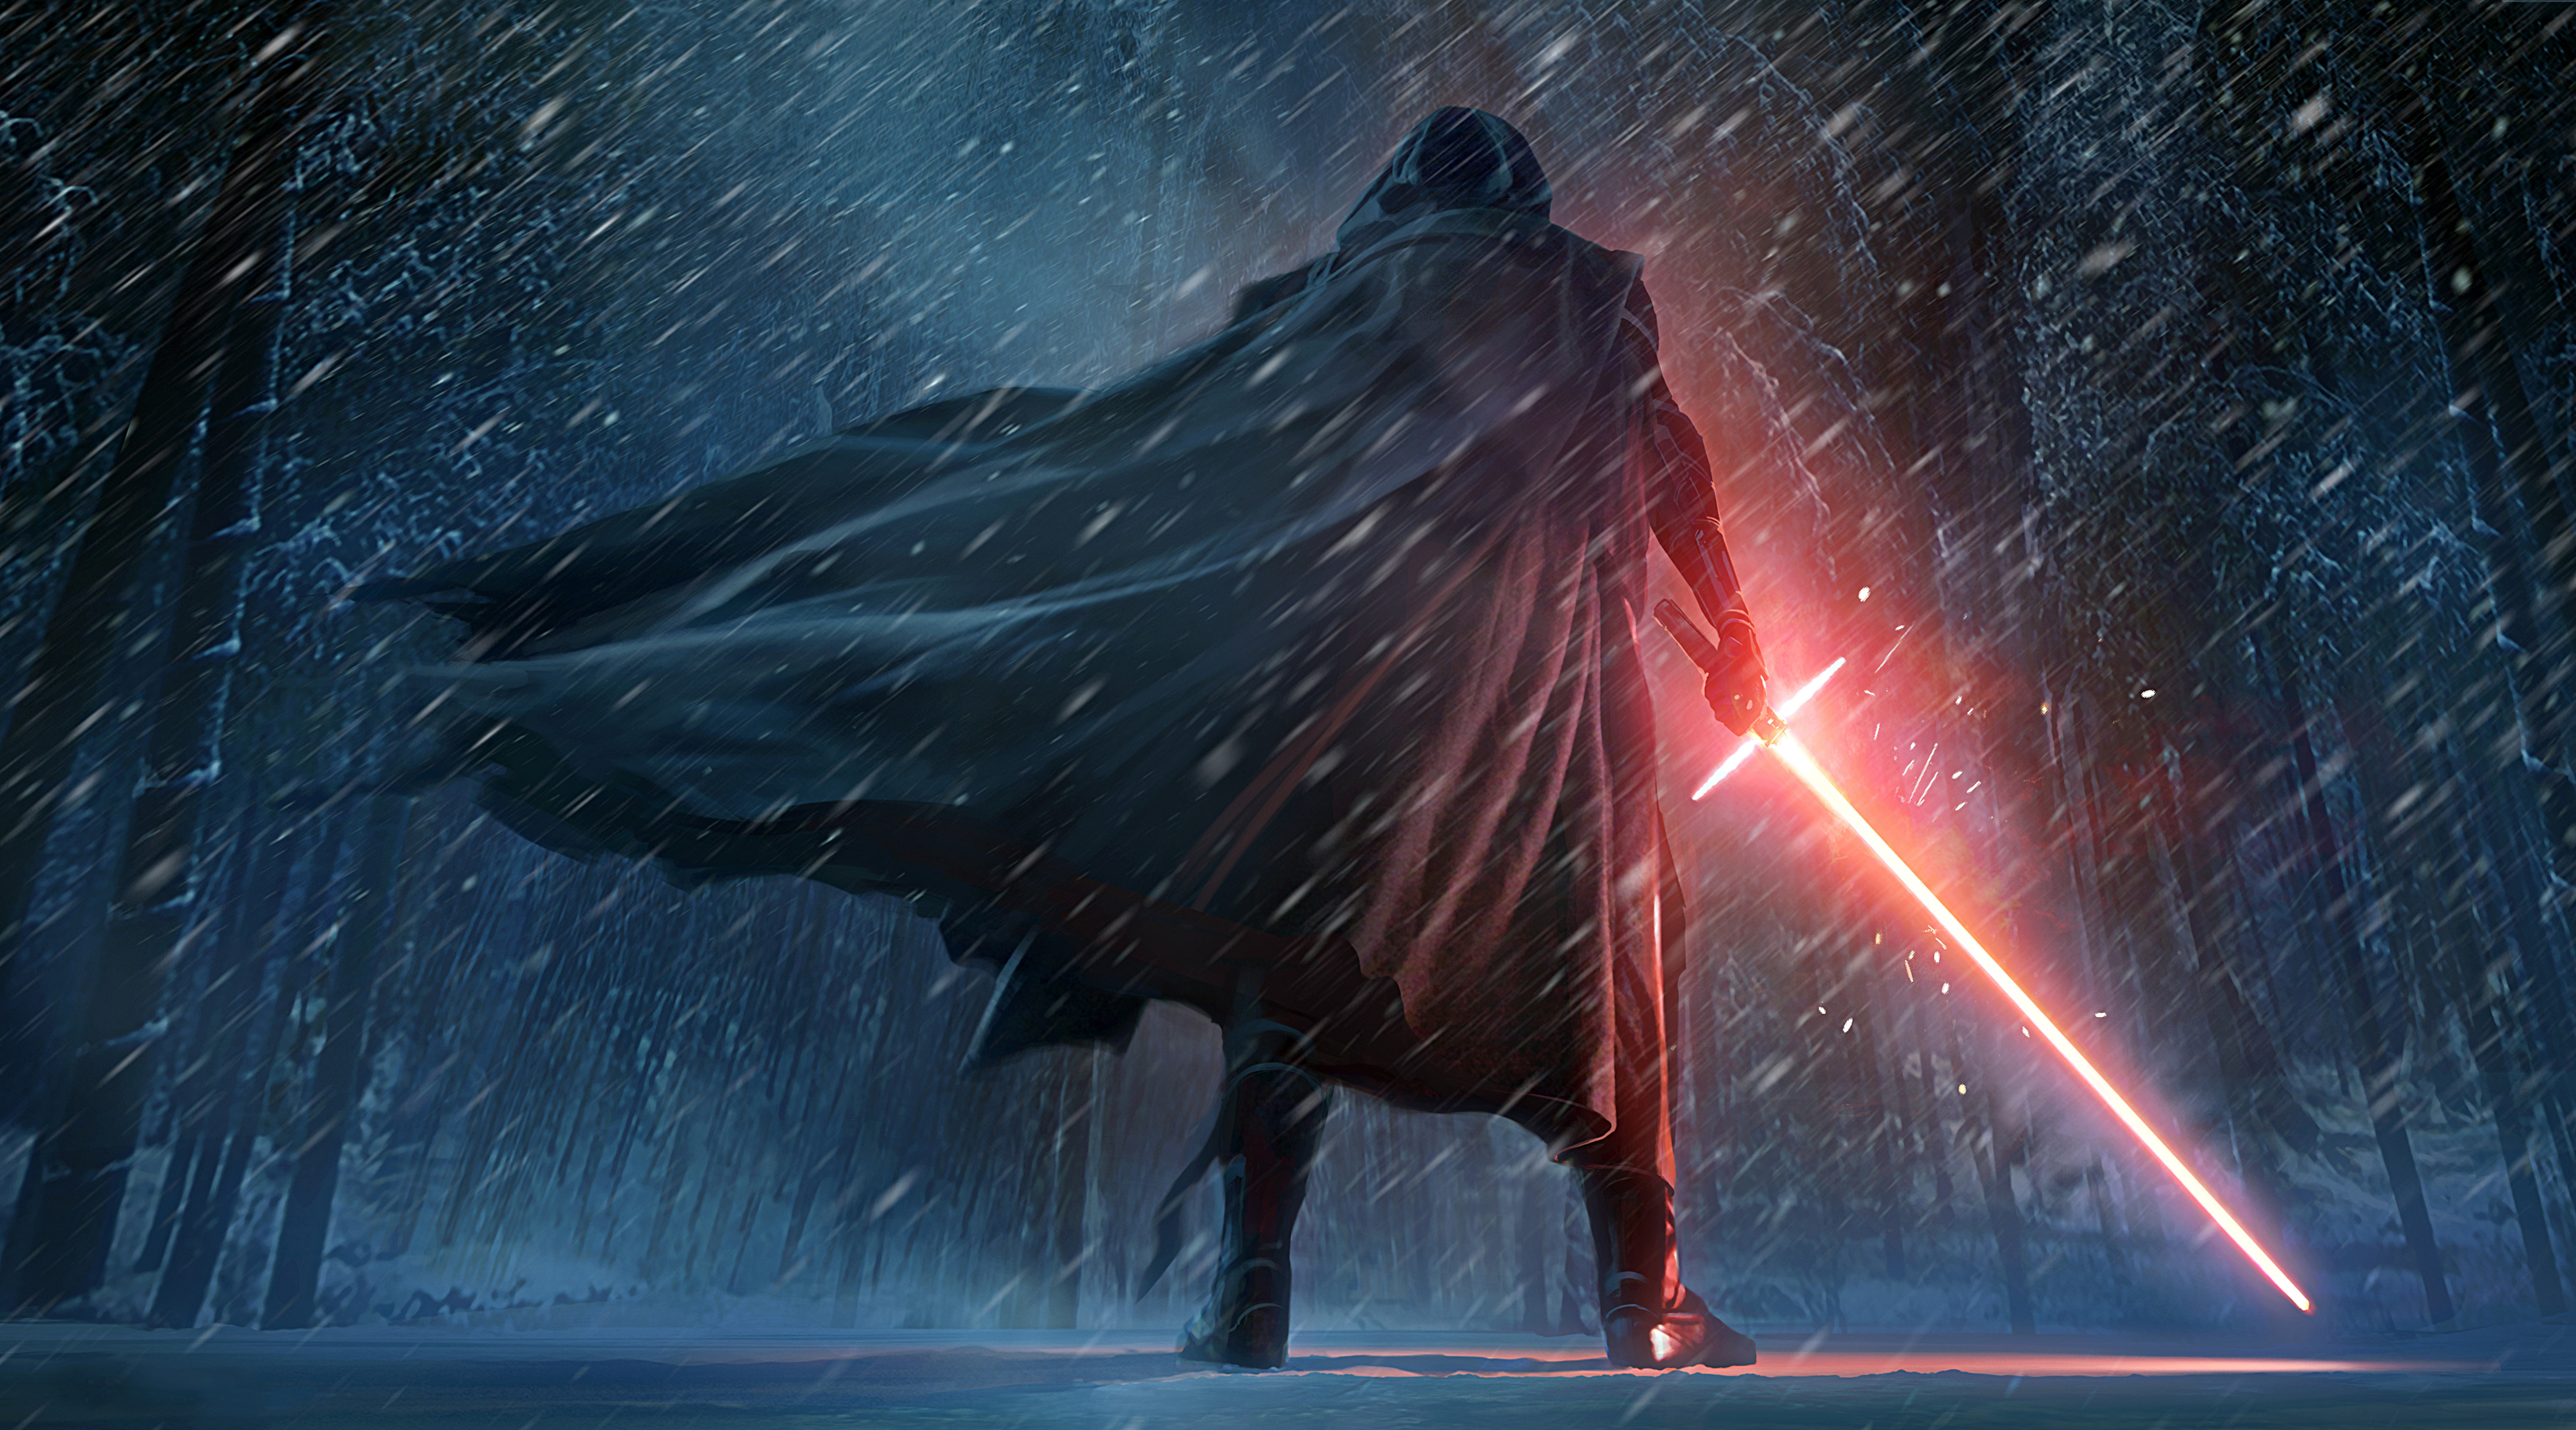 Movie Star Wars Episode VII: The Force Awakens 8k Ultra HD Wallpaper